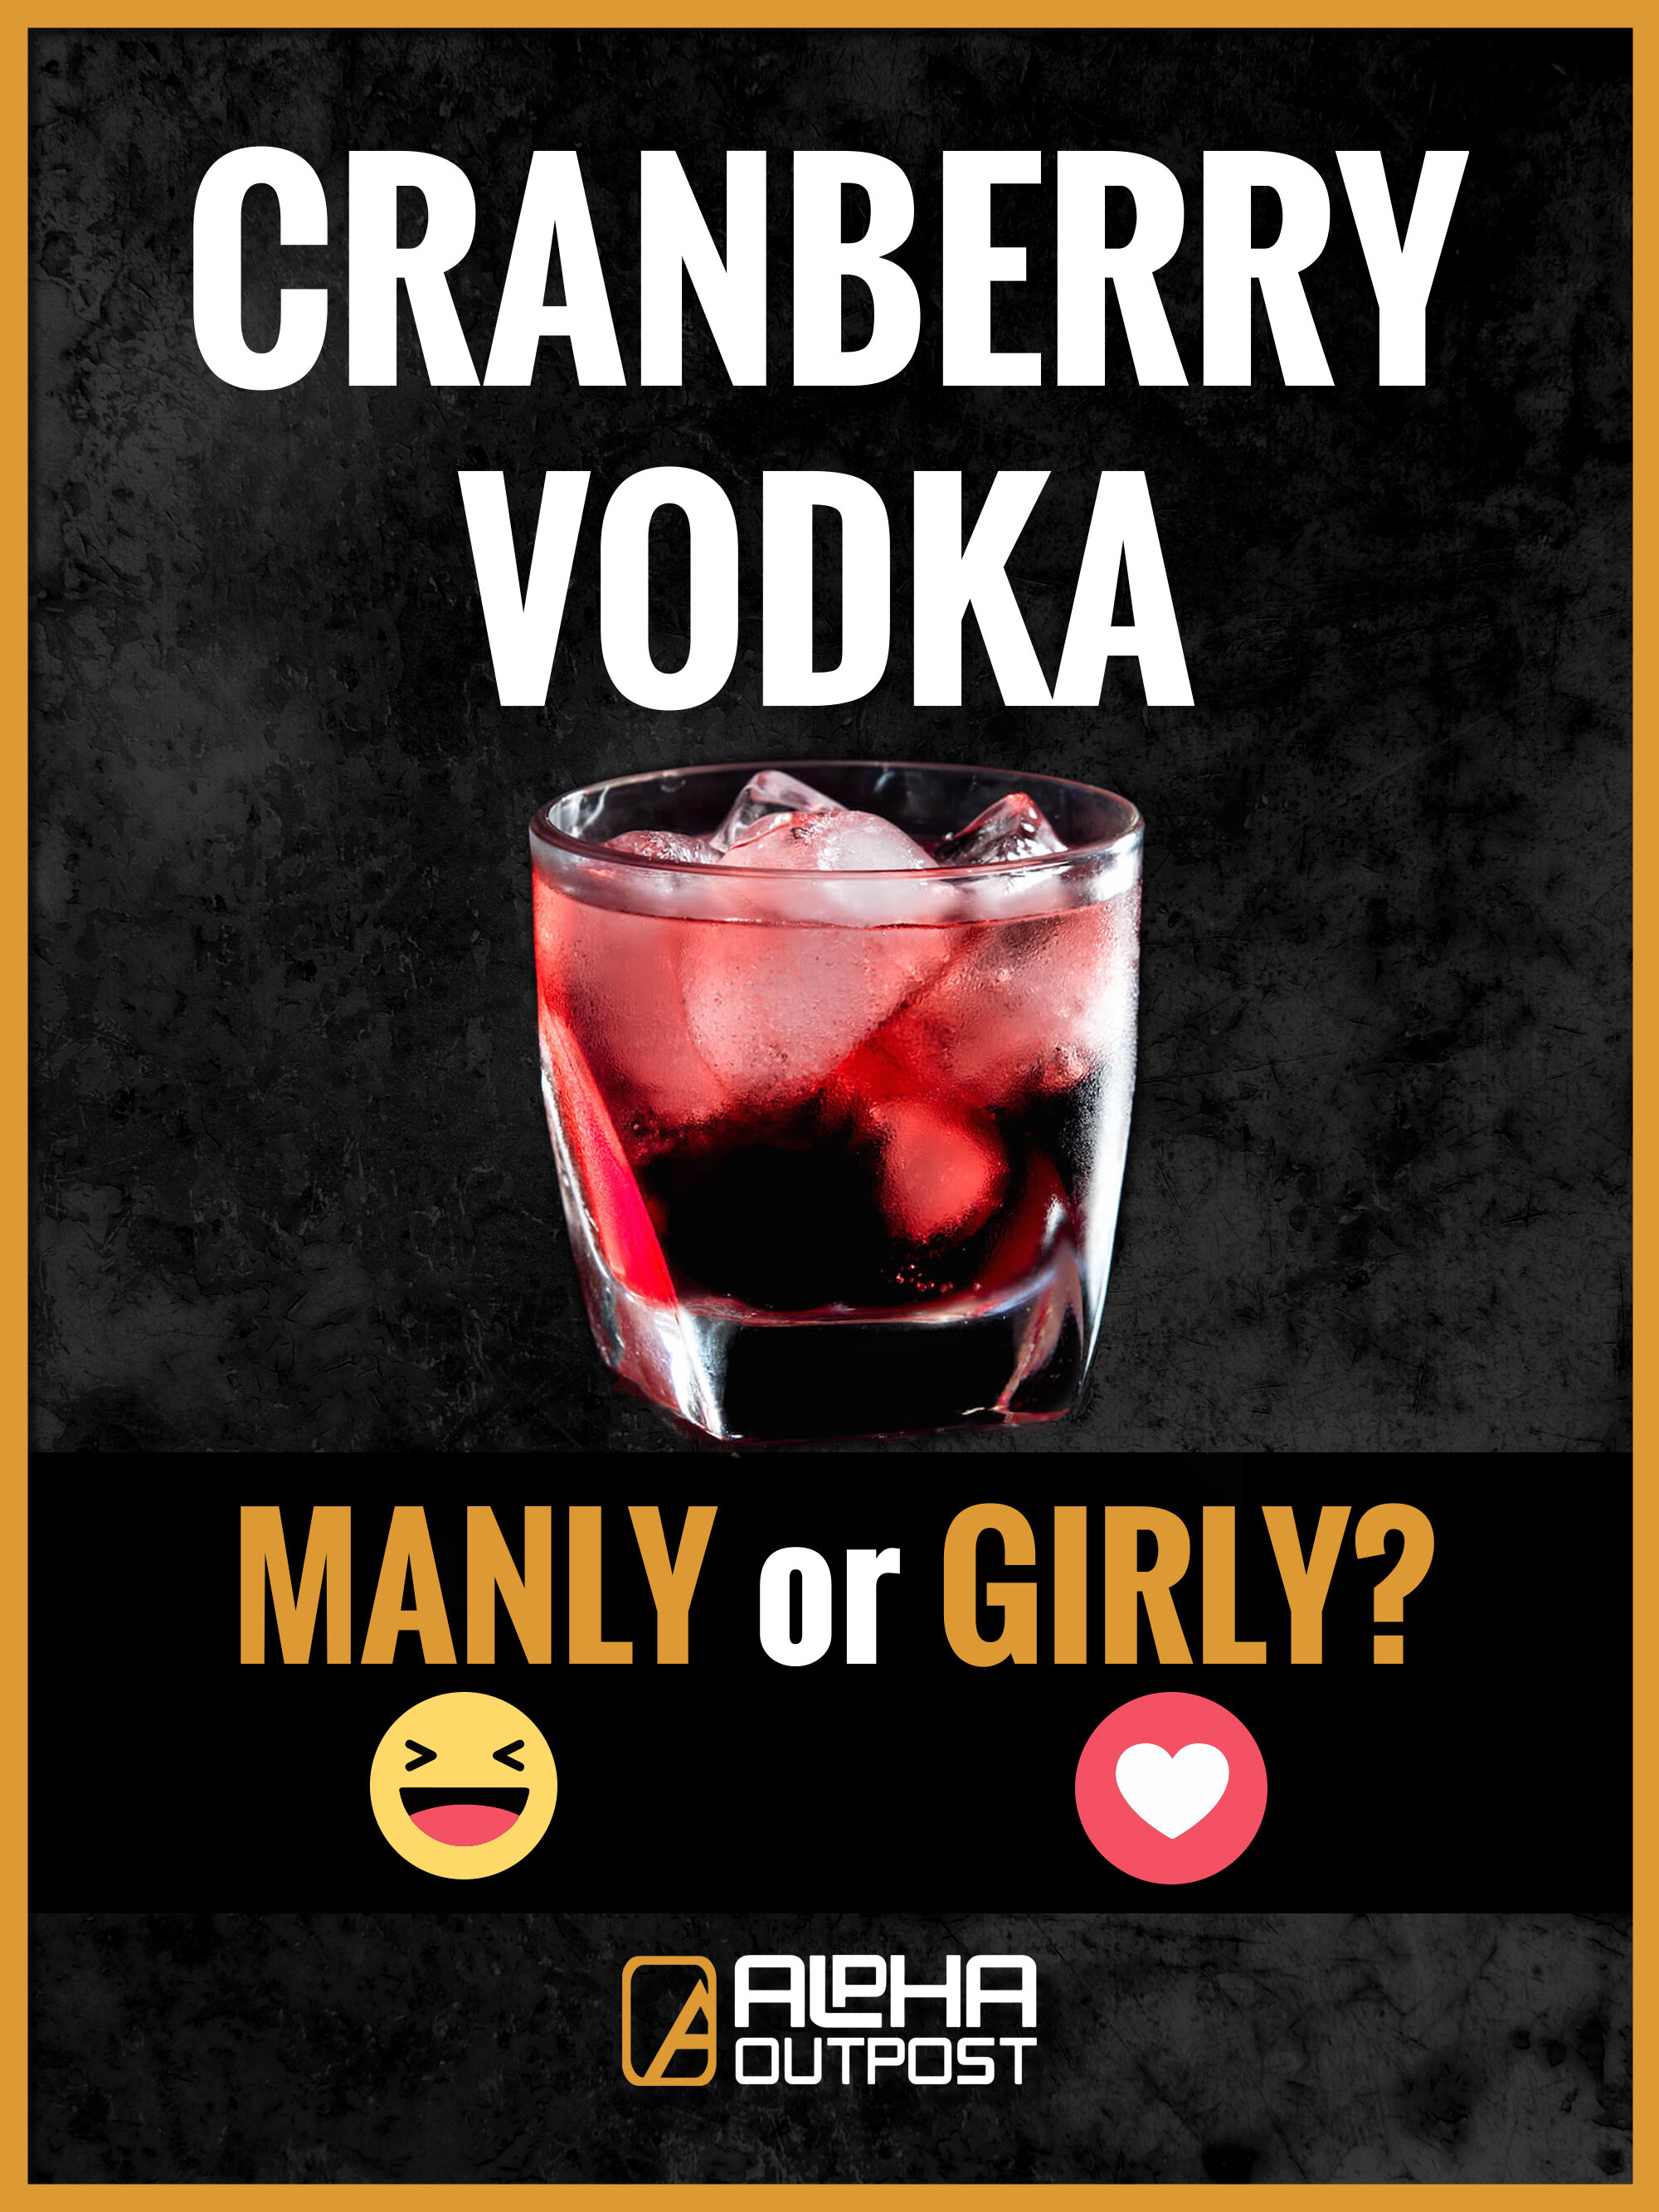 Girly drink_cranberry vodka .jpg